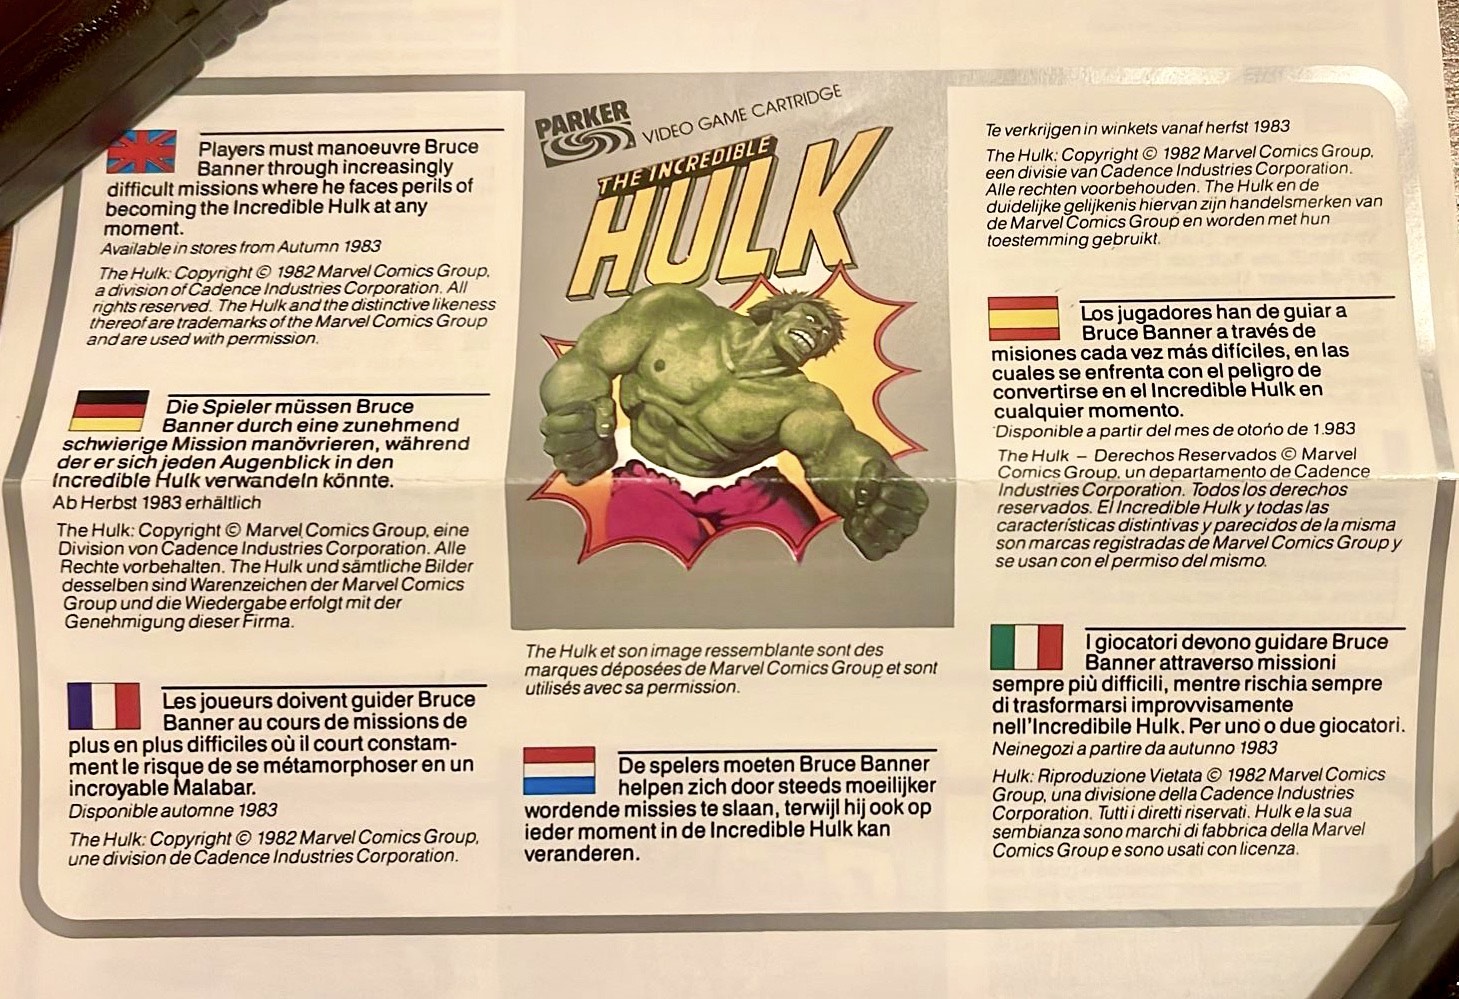 The Incredible Hulk!